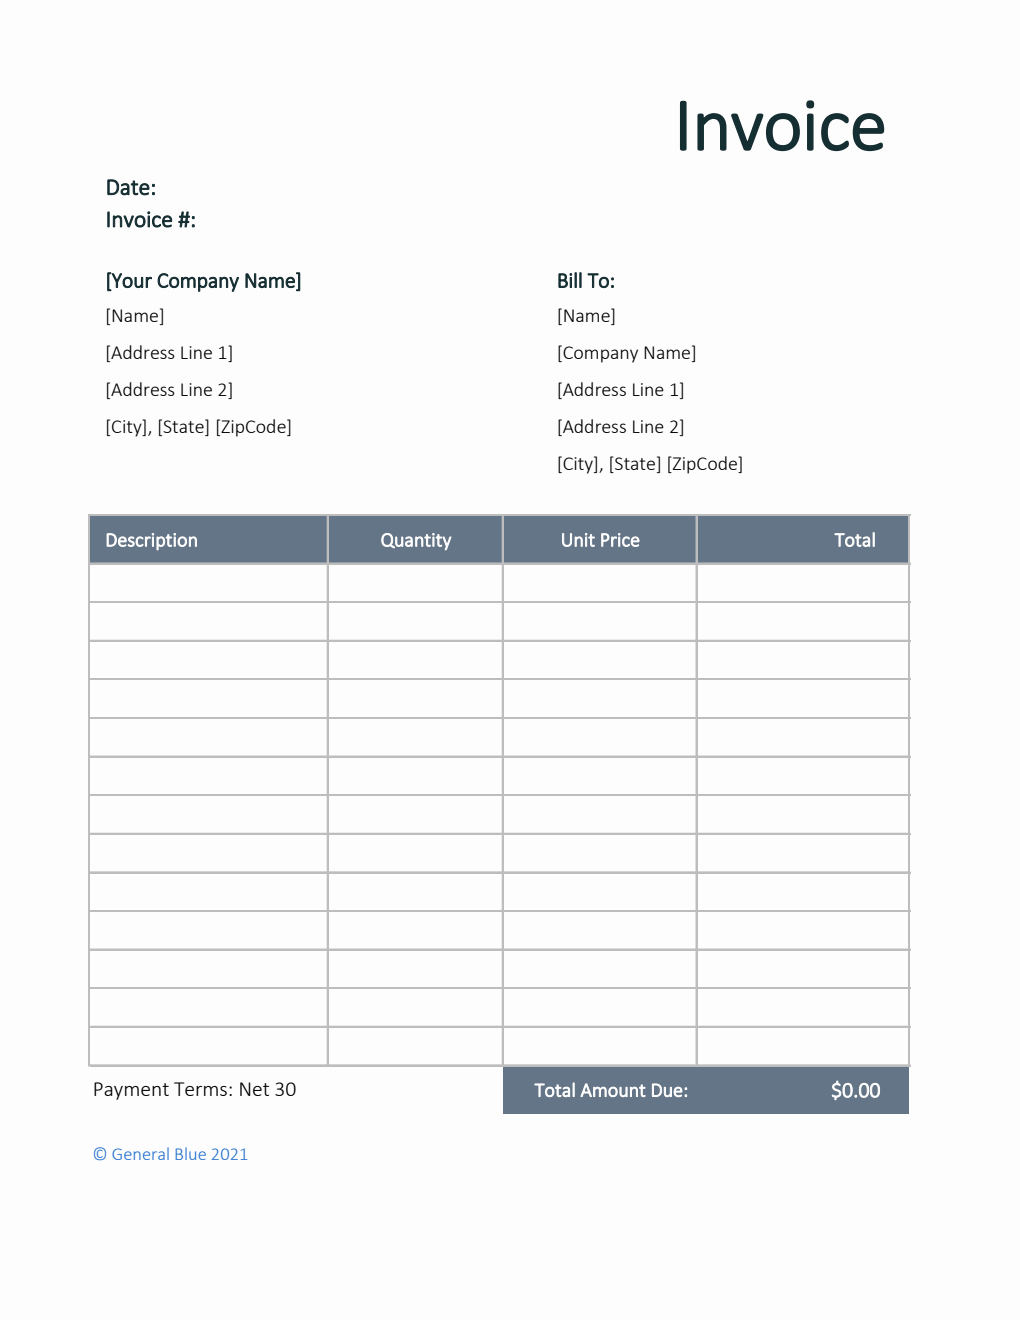 U.S. Invoice Template in Excel (Portrait)